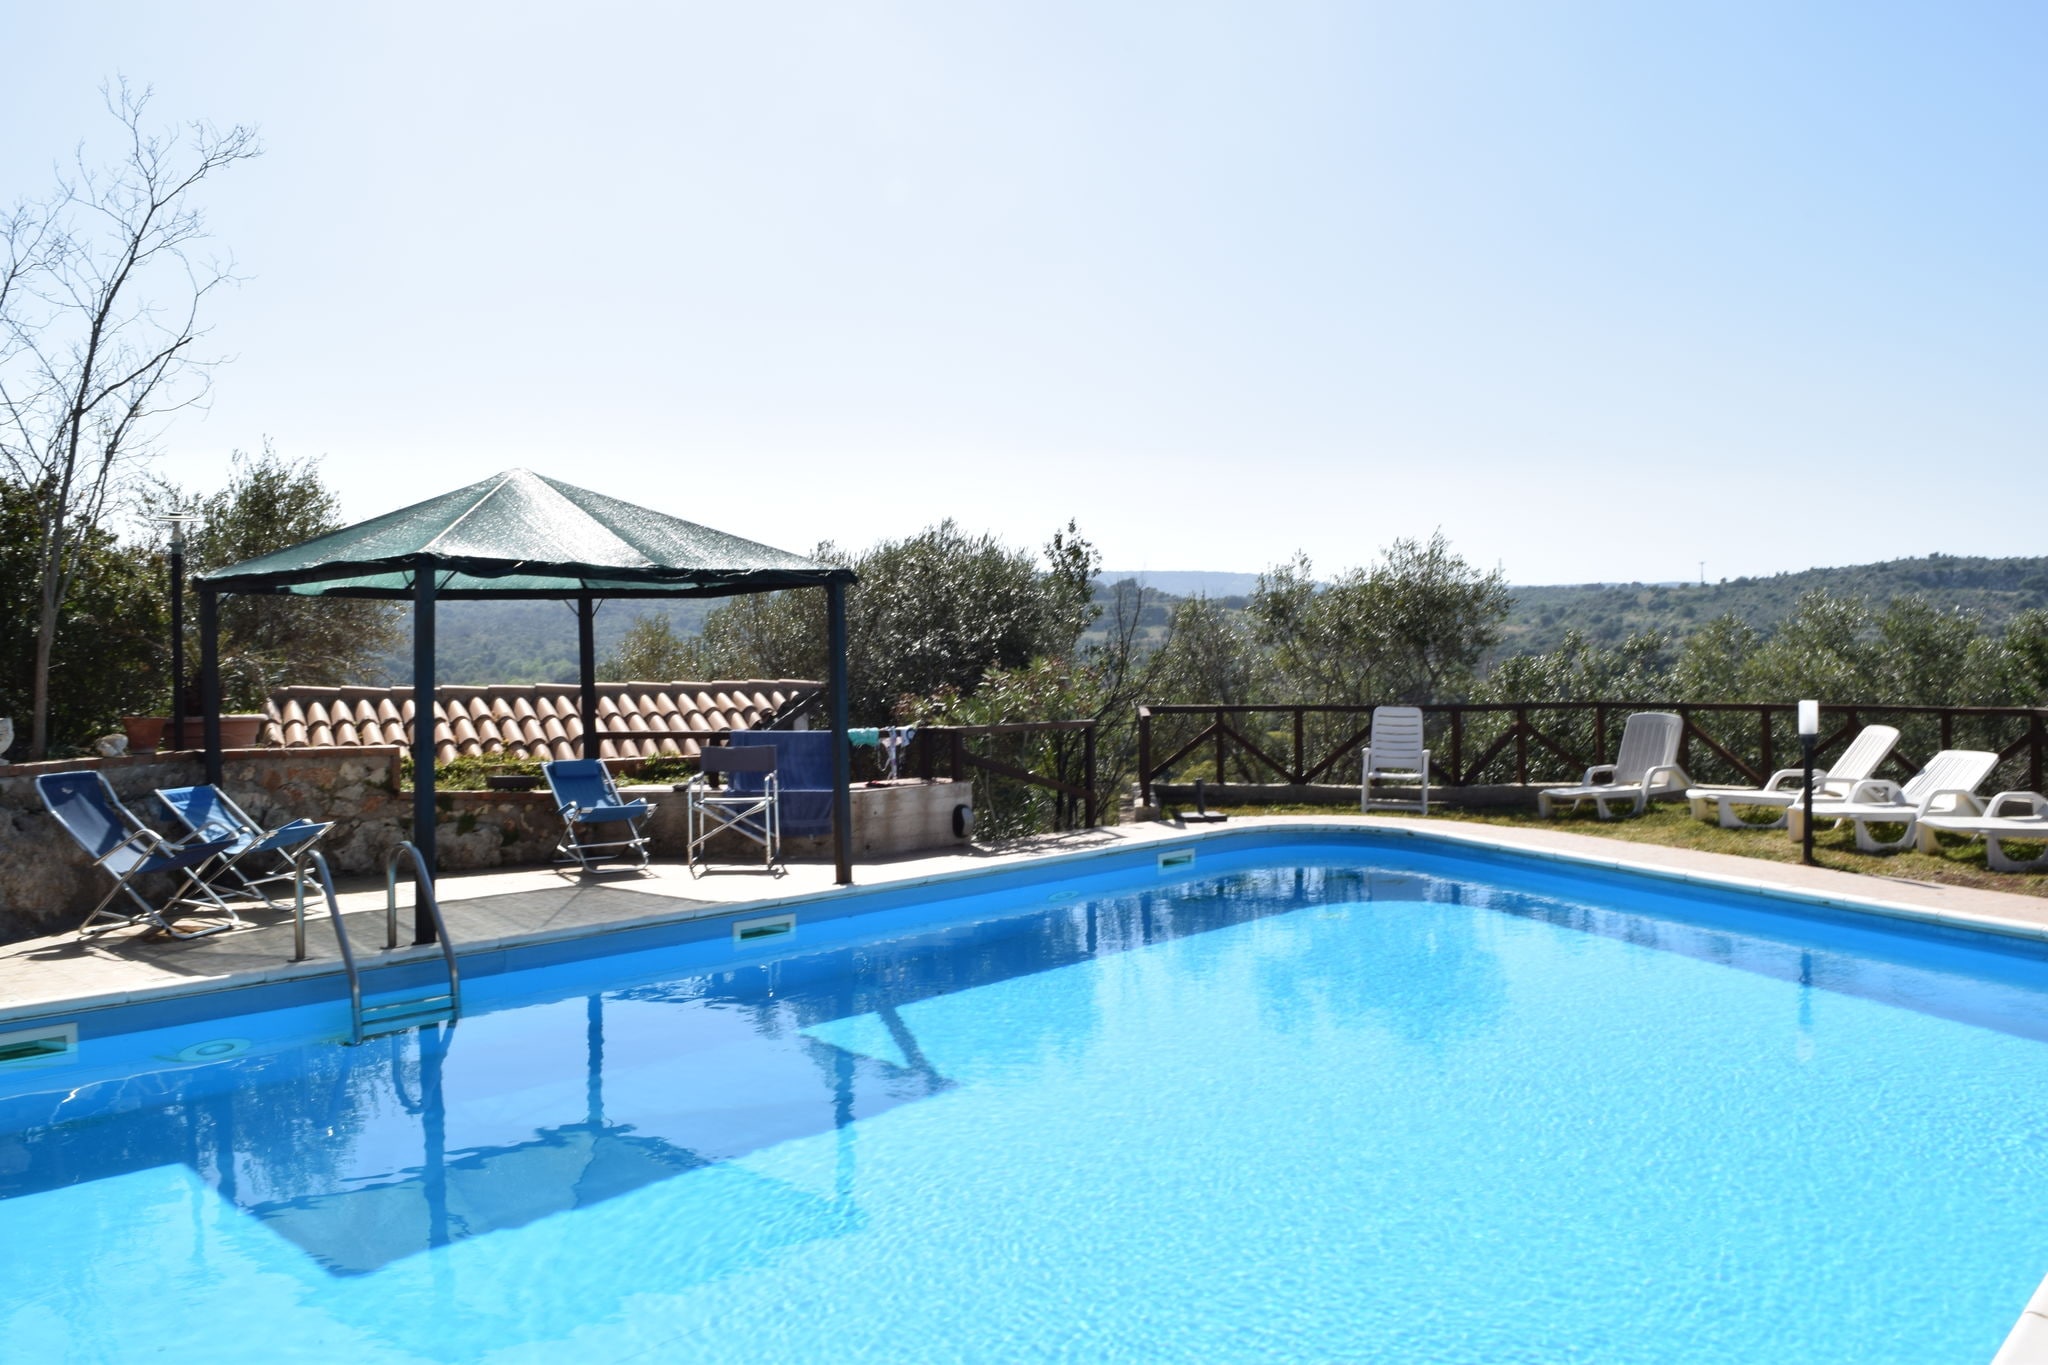 Gemütliche Villa mit Swimmingpool in Syrakus, Sizilien